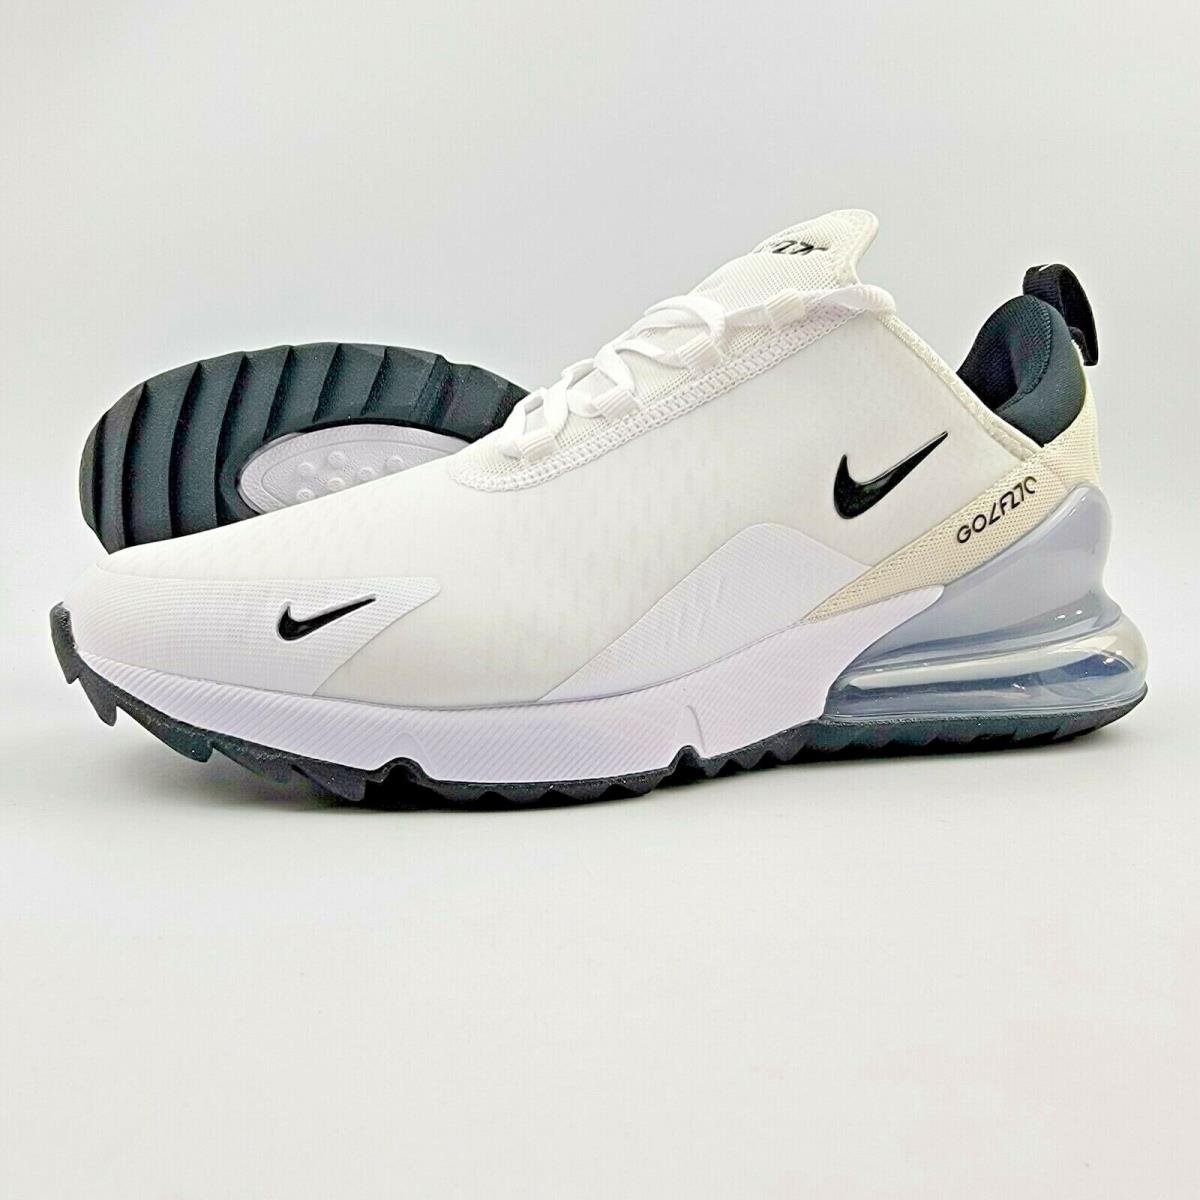 Nike Air Max 270 G Golf Shoes White Black Pure Platinum CK6463-102 Mens Size 14